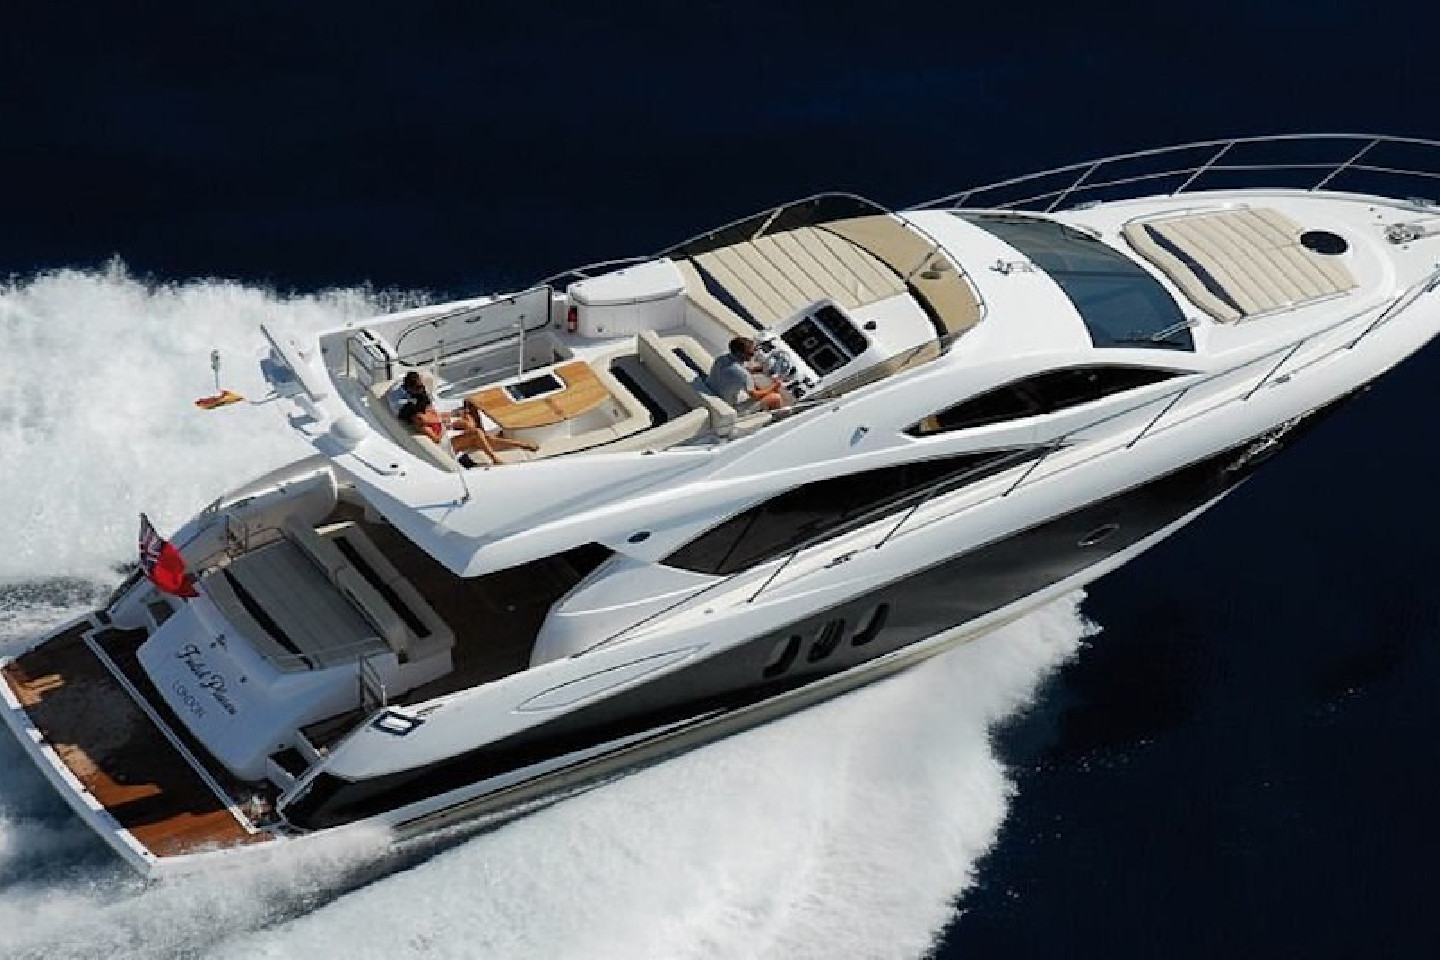 Power boat FOR CHARTER, year 2012 brand Sunseeker and model Manhattan 52, available in Marina Port Vell Barcelona Barcelona España